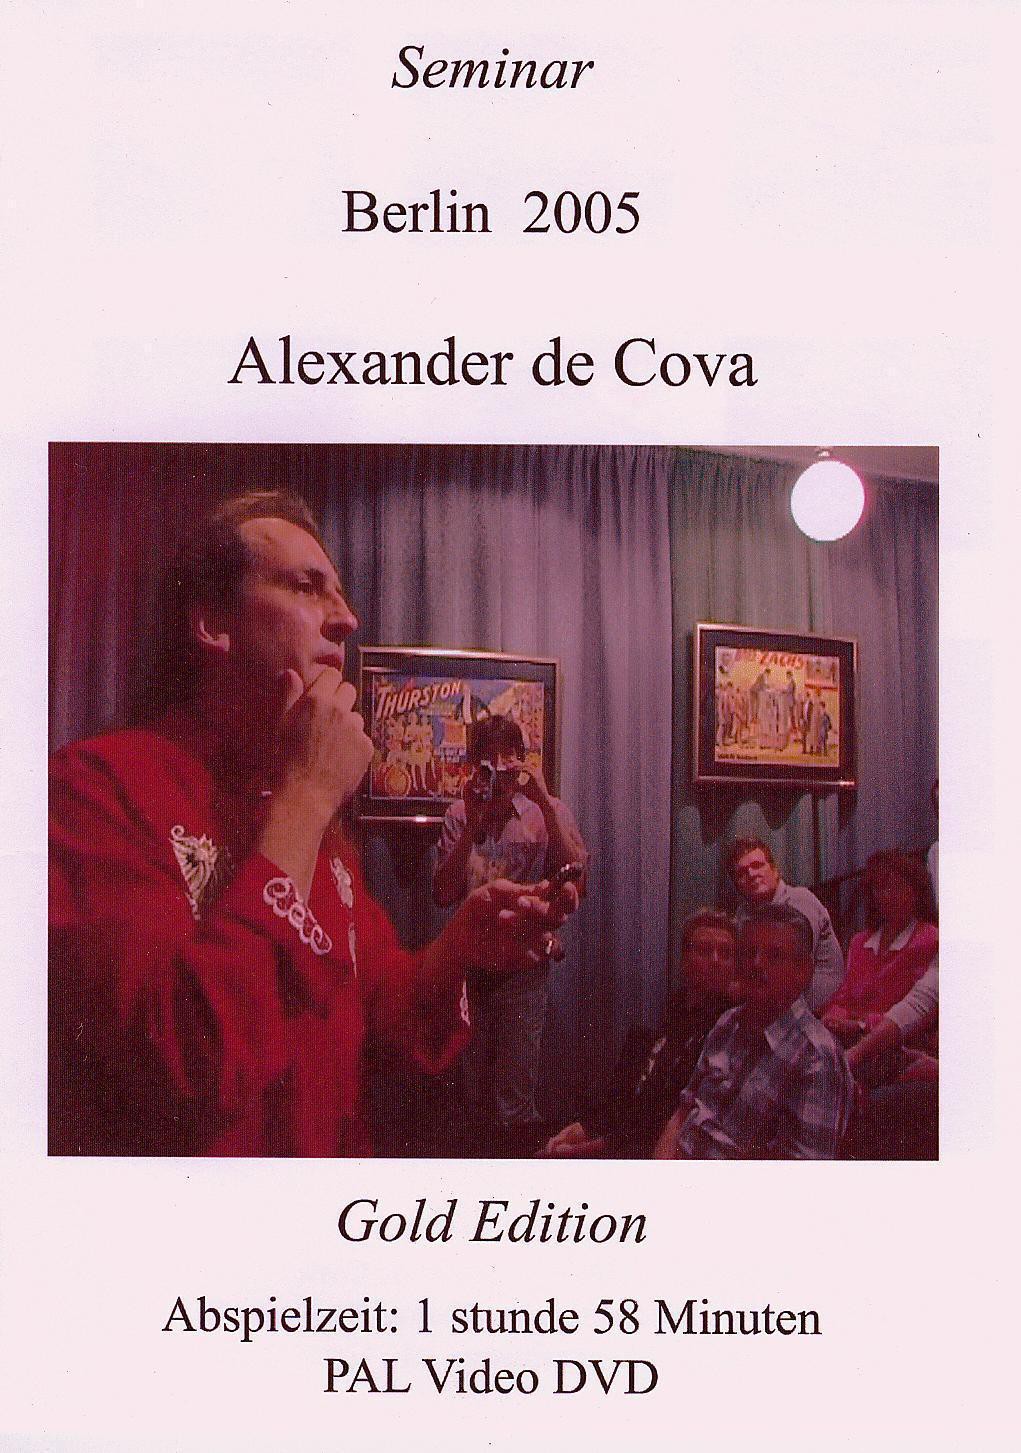 Alexander de Cova - Seminar (Berlin 2005)